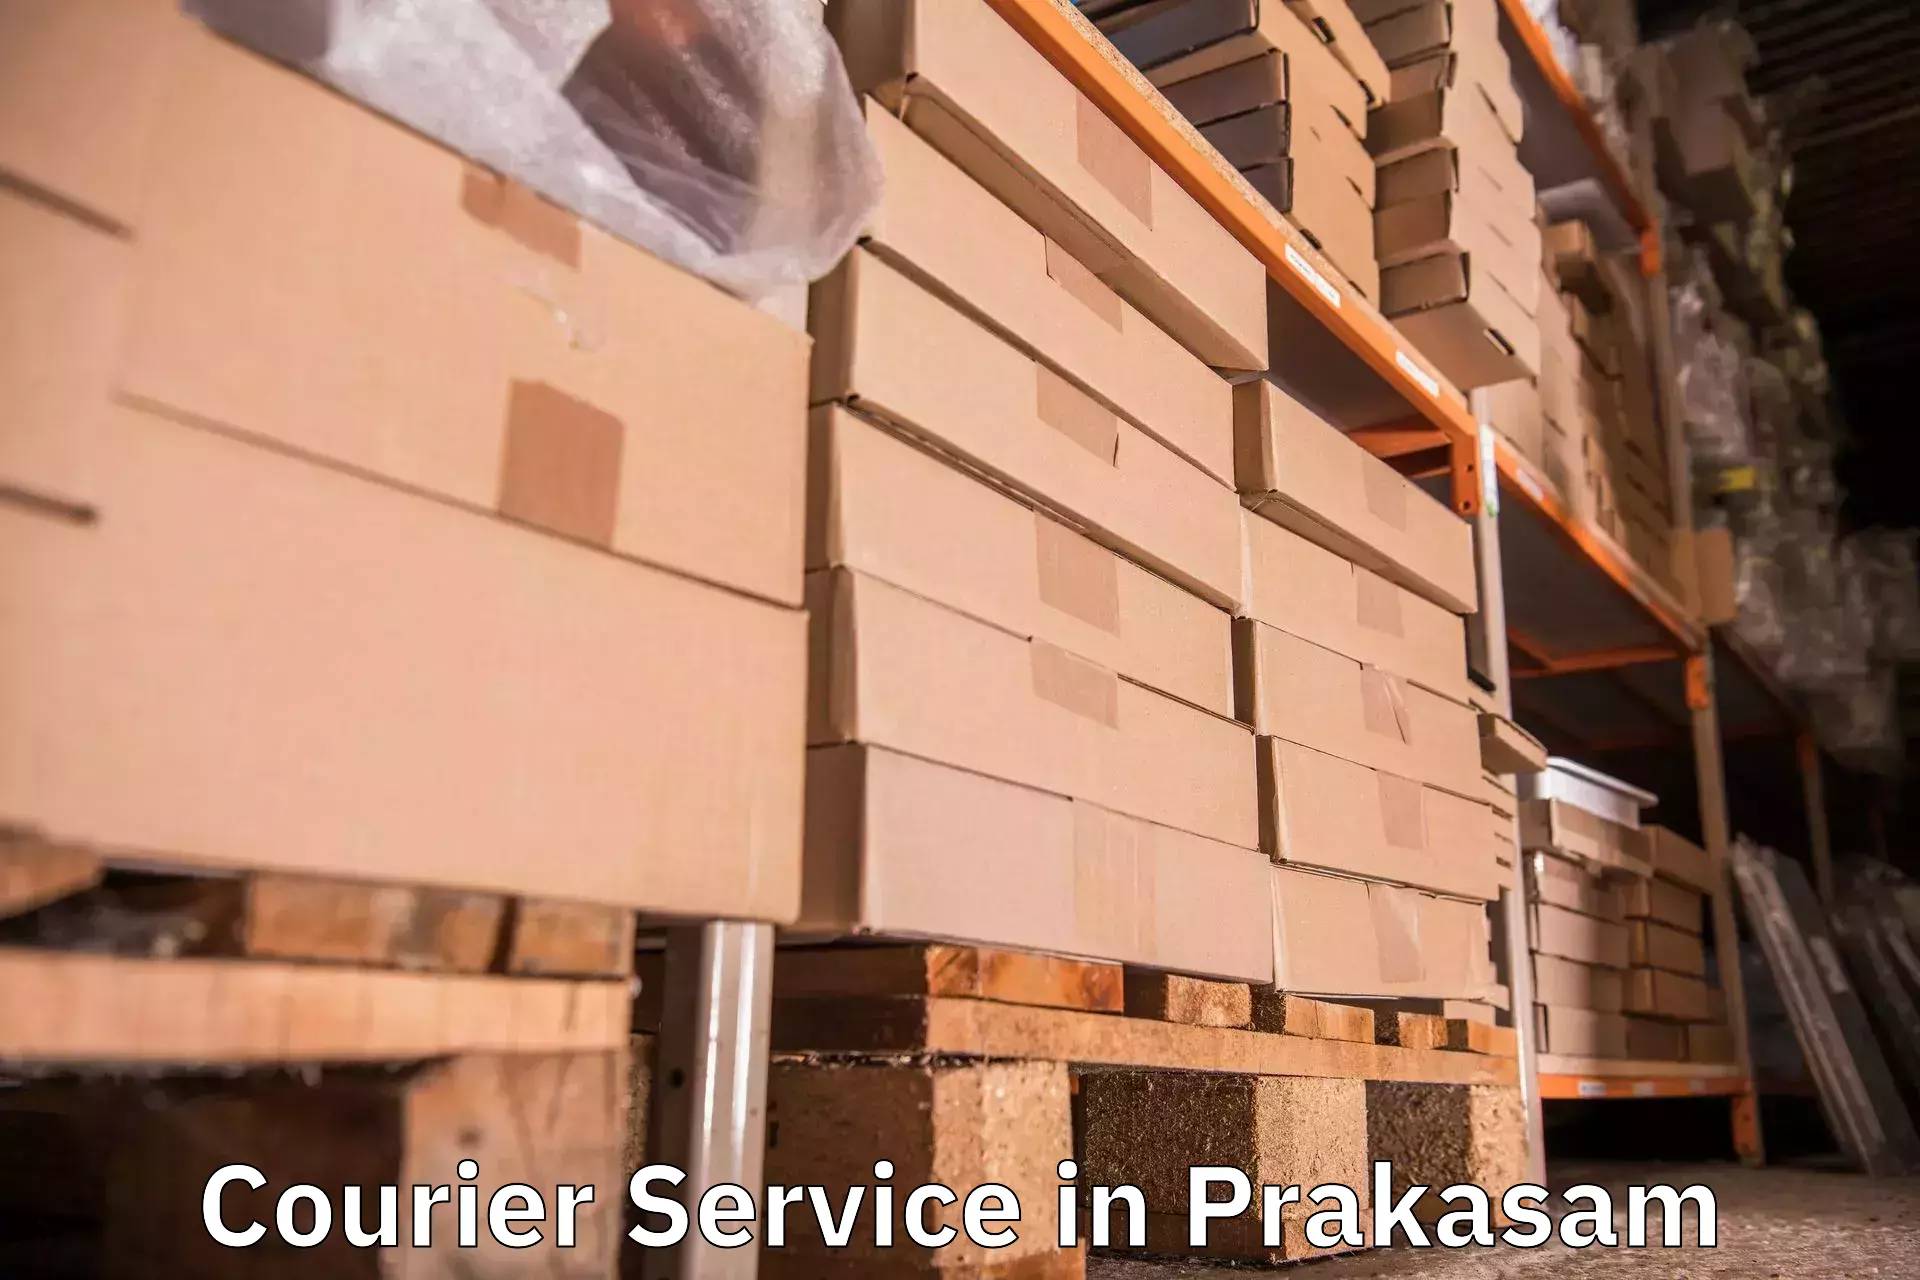 Express mail service in Prakasam